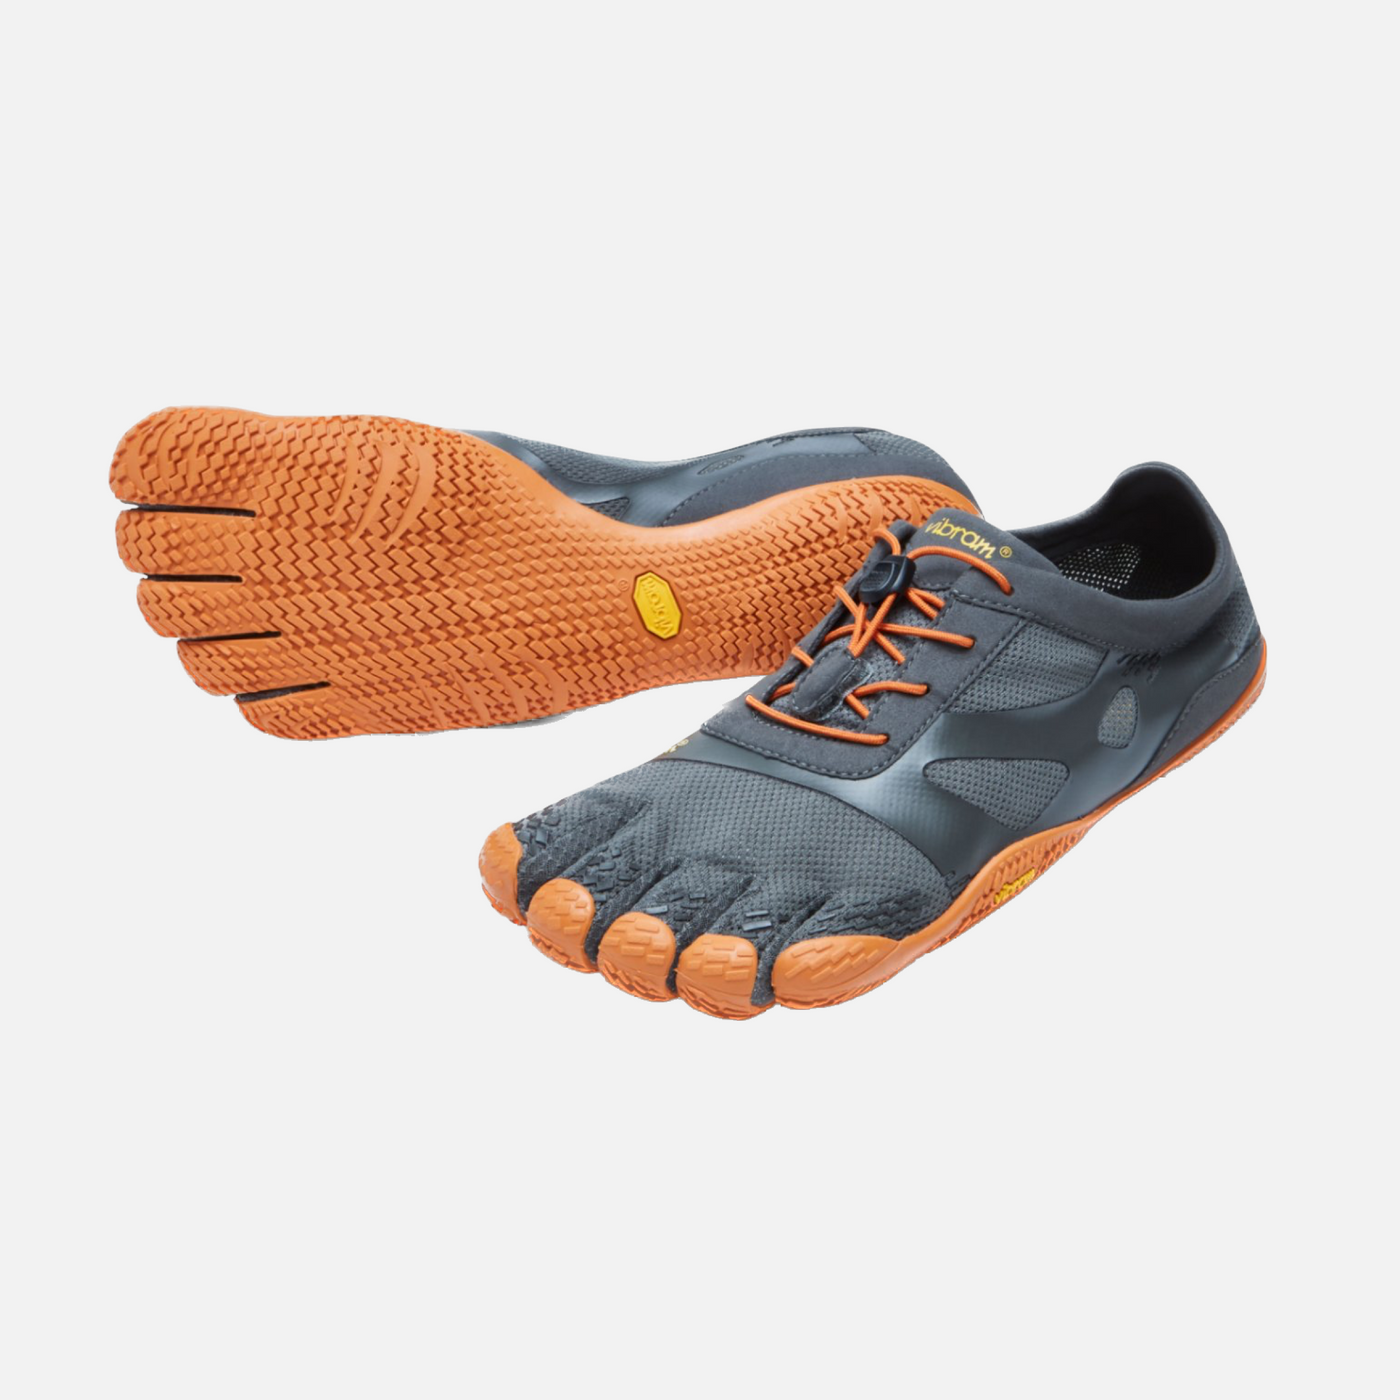 Vibram Kso Evo Womens Barefoot Training Footwear -Grey/Orange